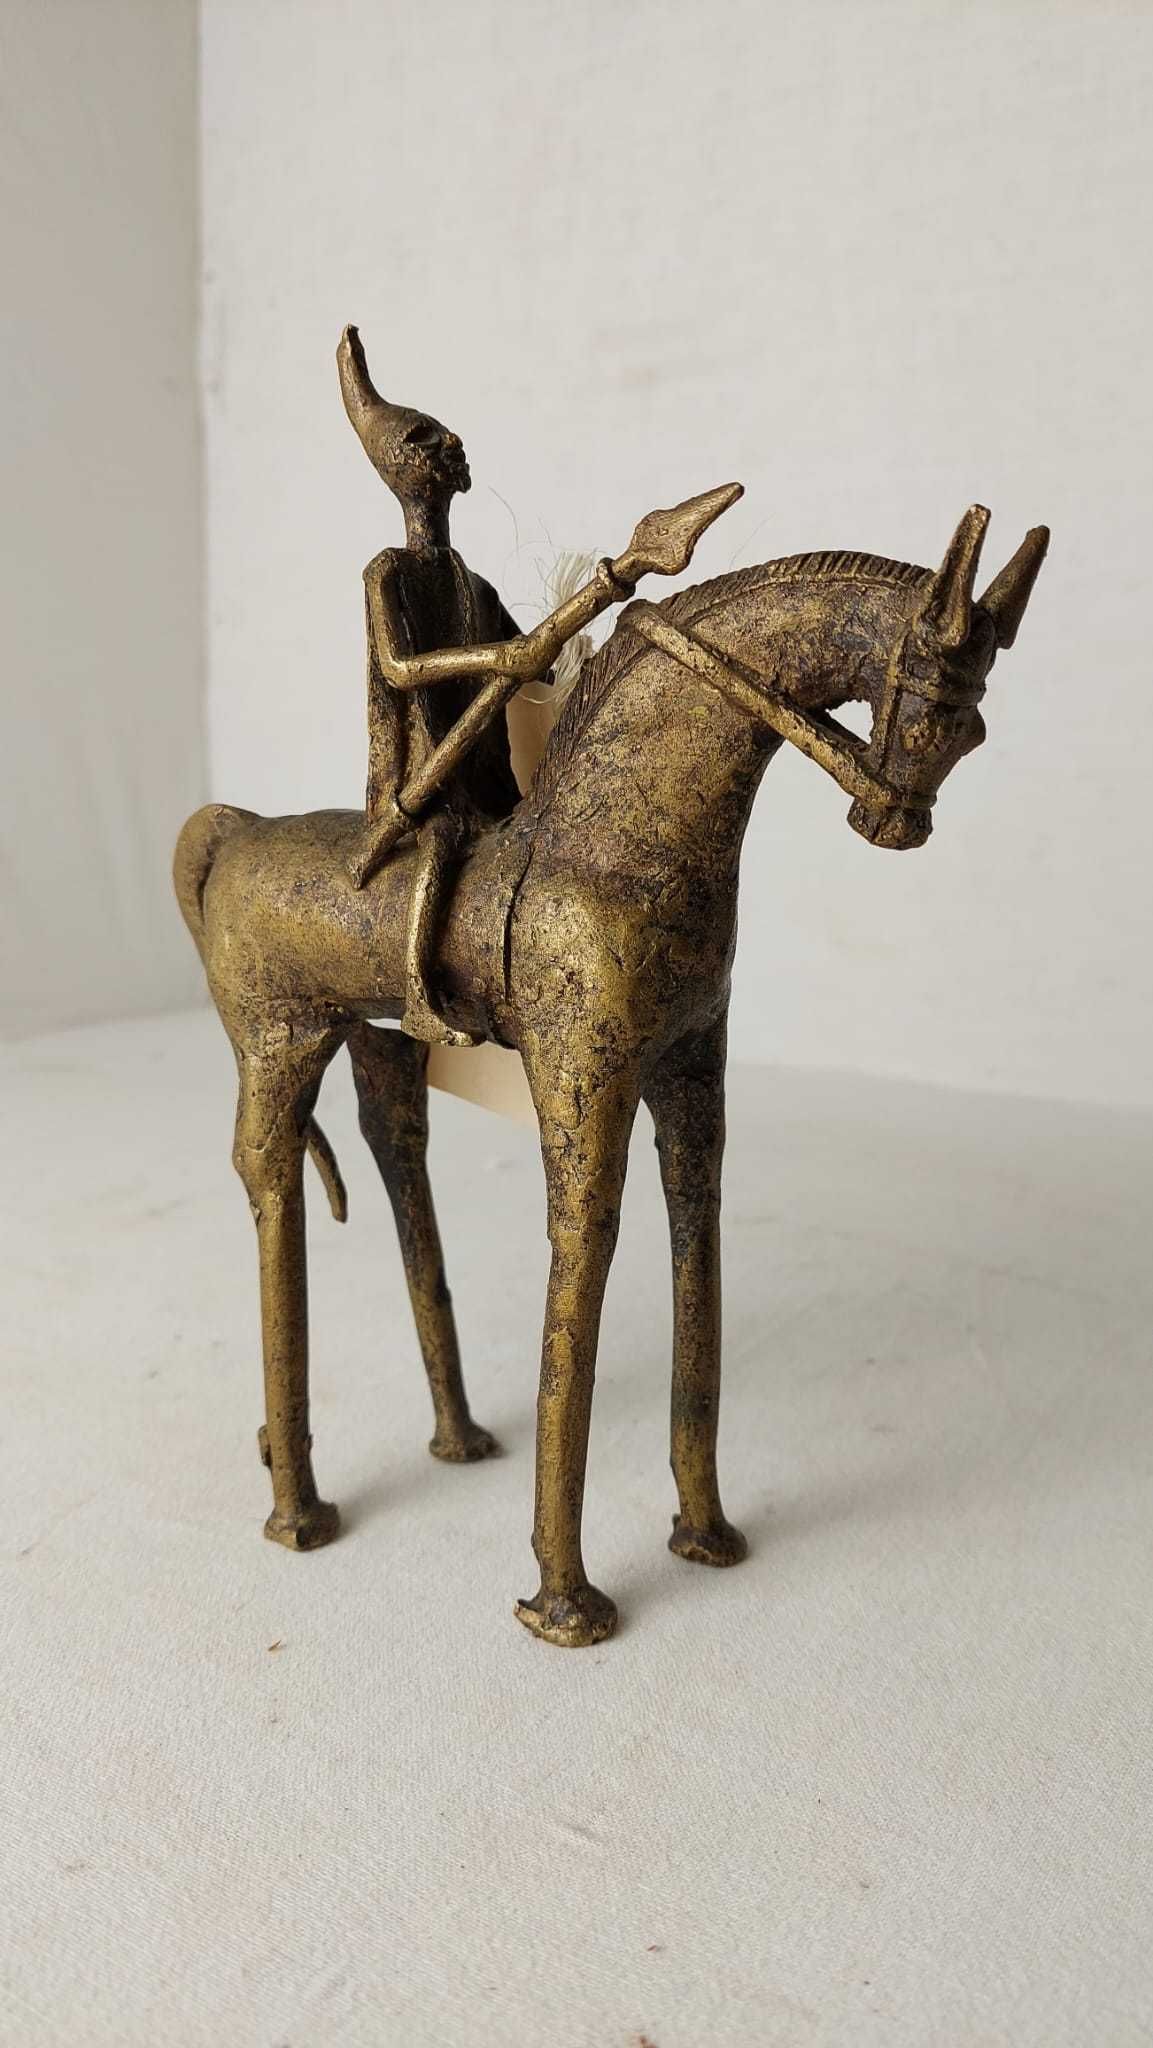 Călăreț "Dogon Mali" din bronz, proveniență Franța, sec XIX